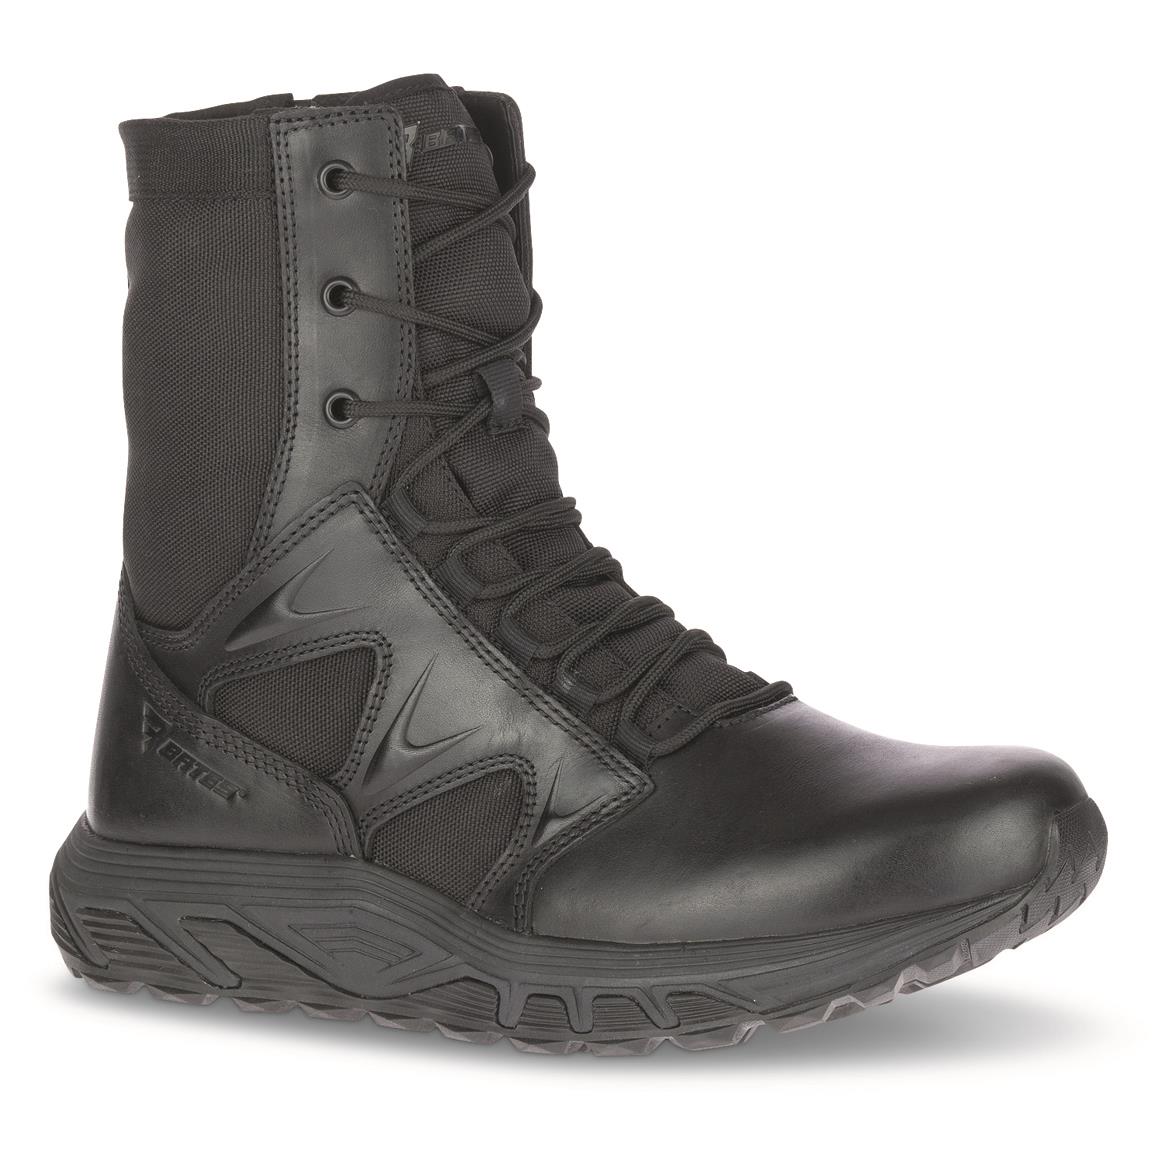 Bates Men's Rush Tall Side-Zip Tactical Boots, Black